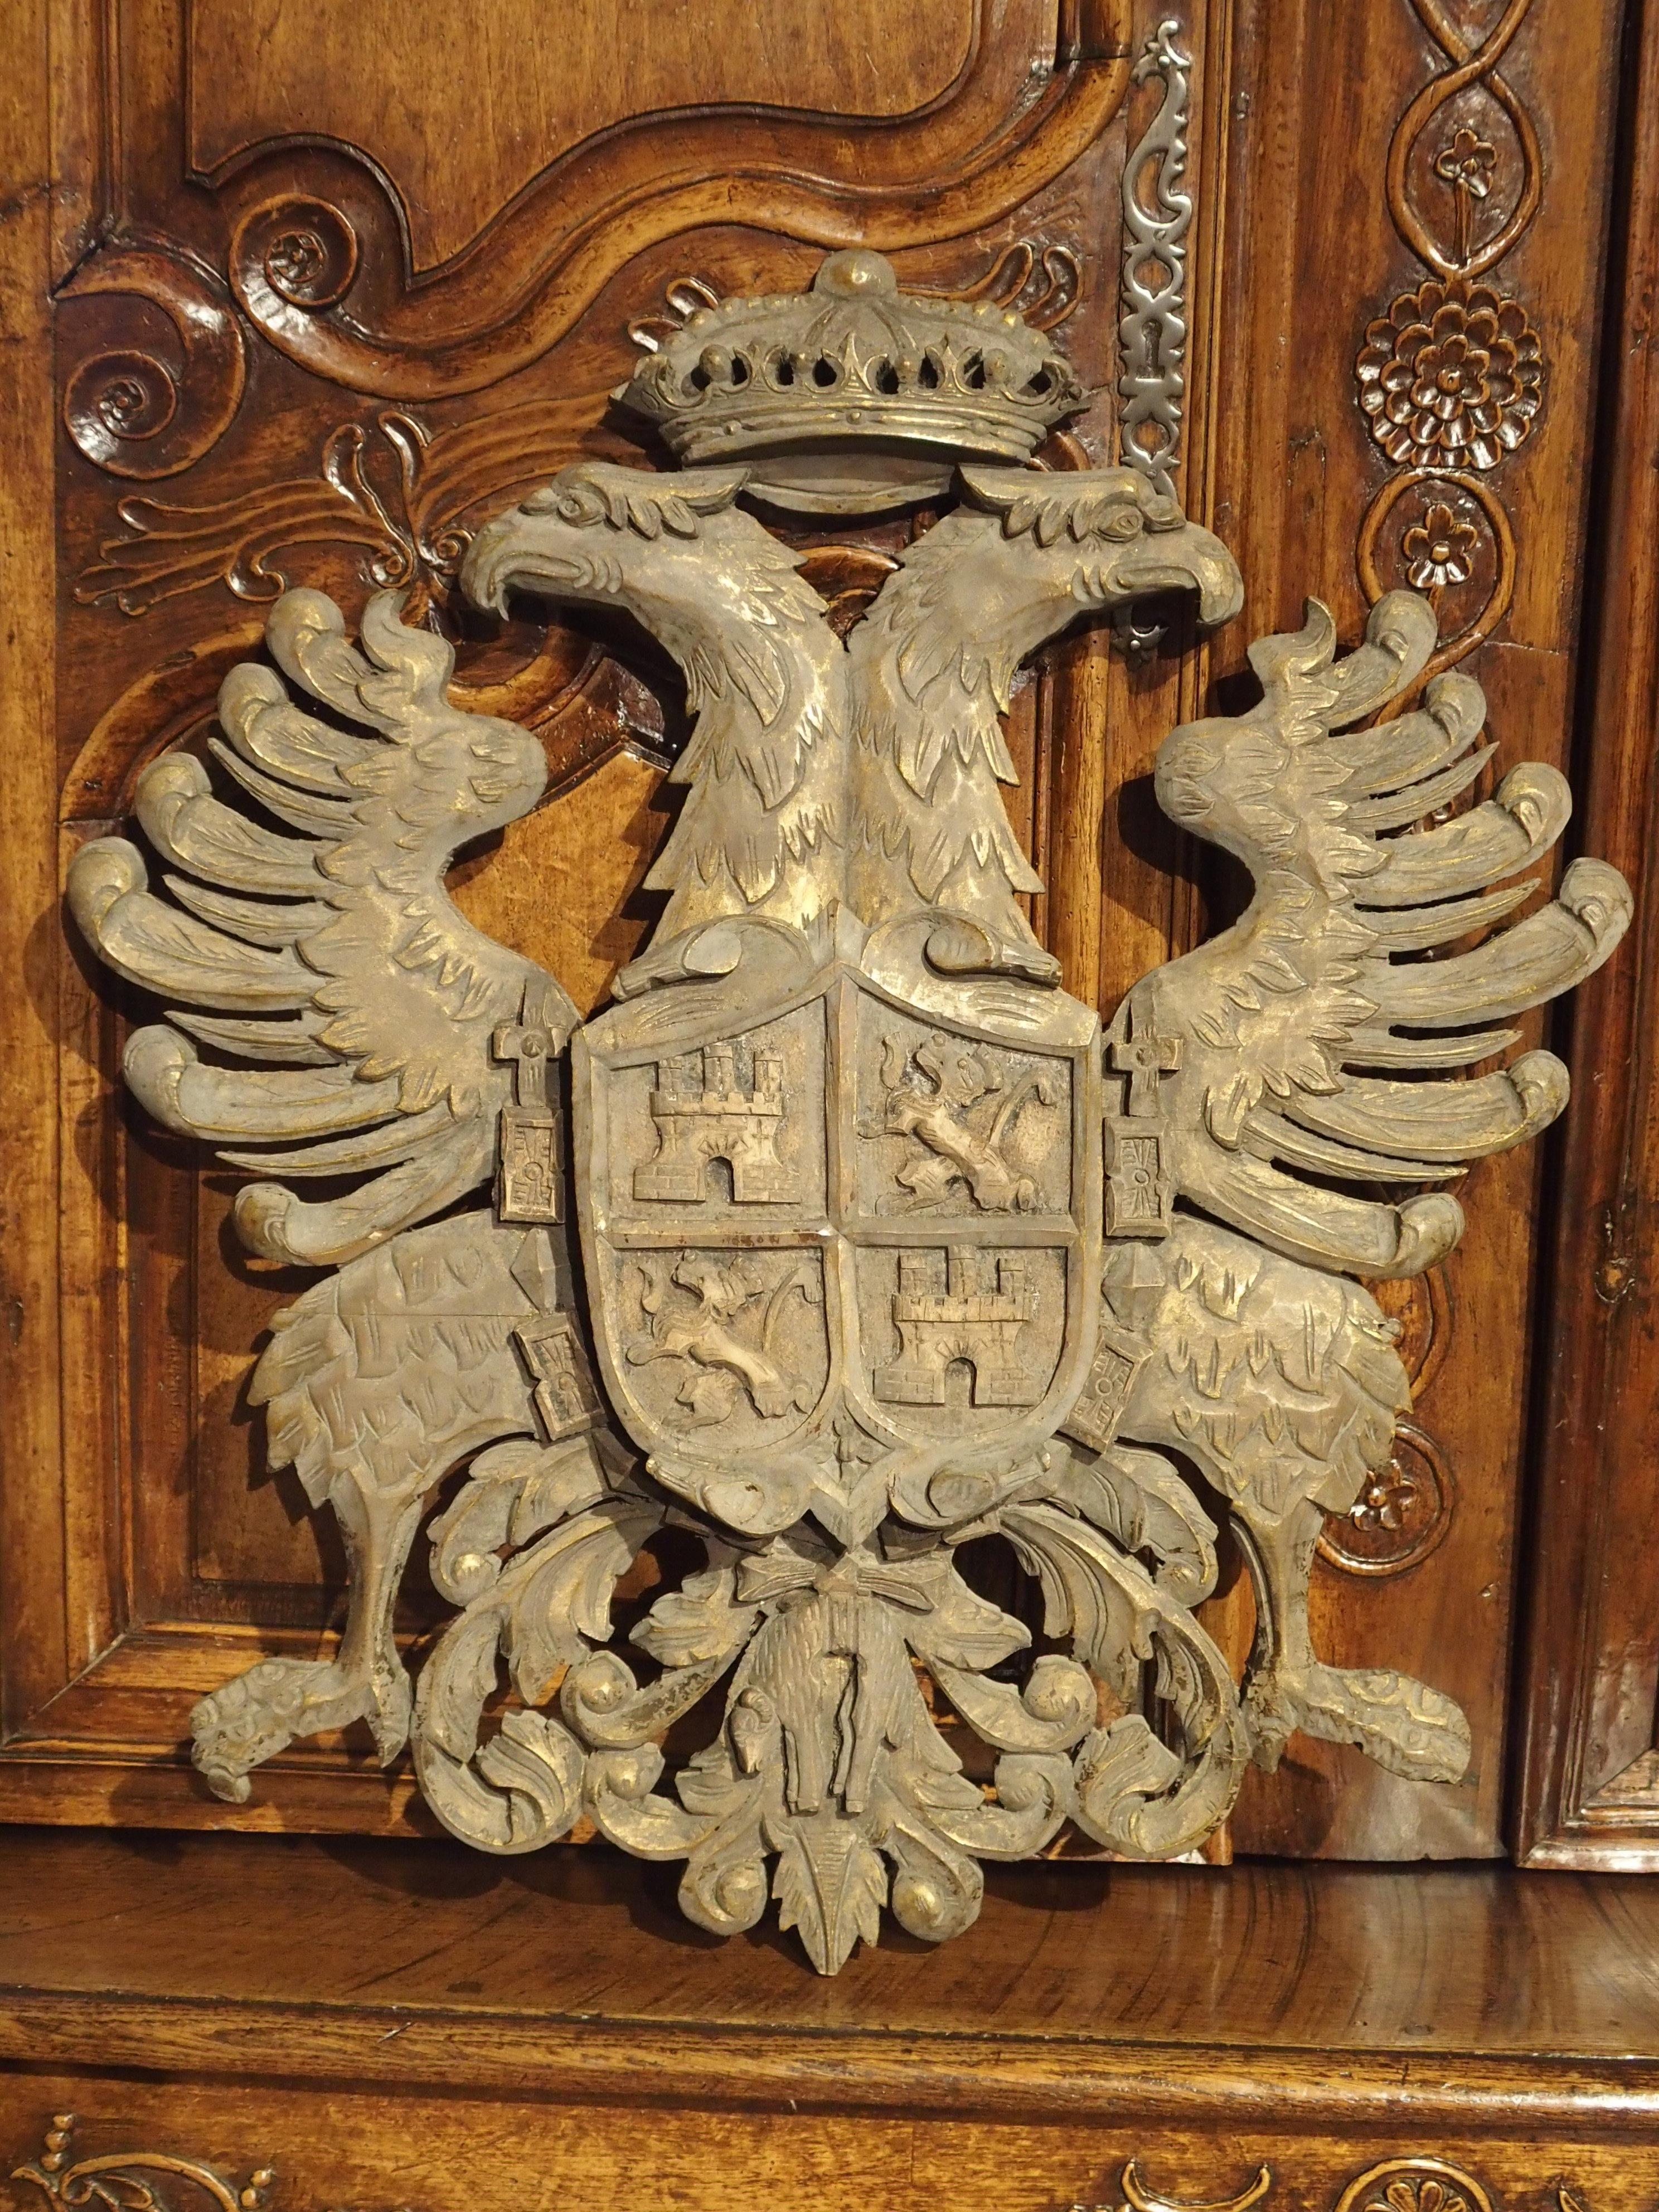 Spain Coat Of Arms Wall Tile Art Heraldic Tabard Design Home Decor 